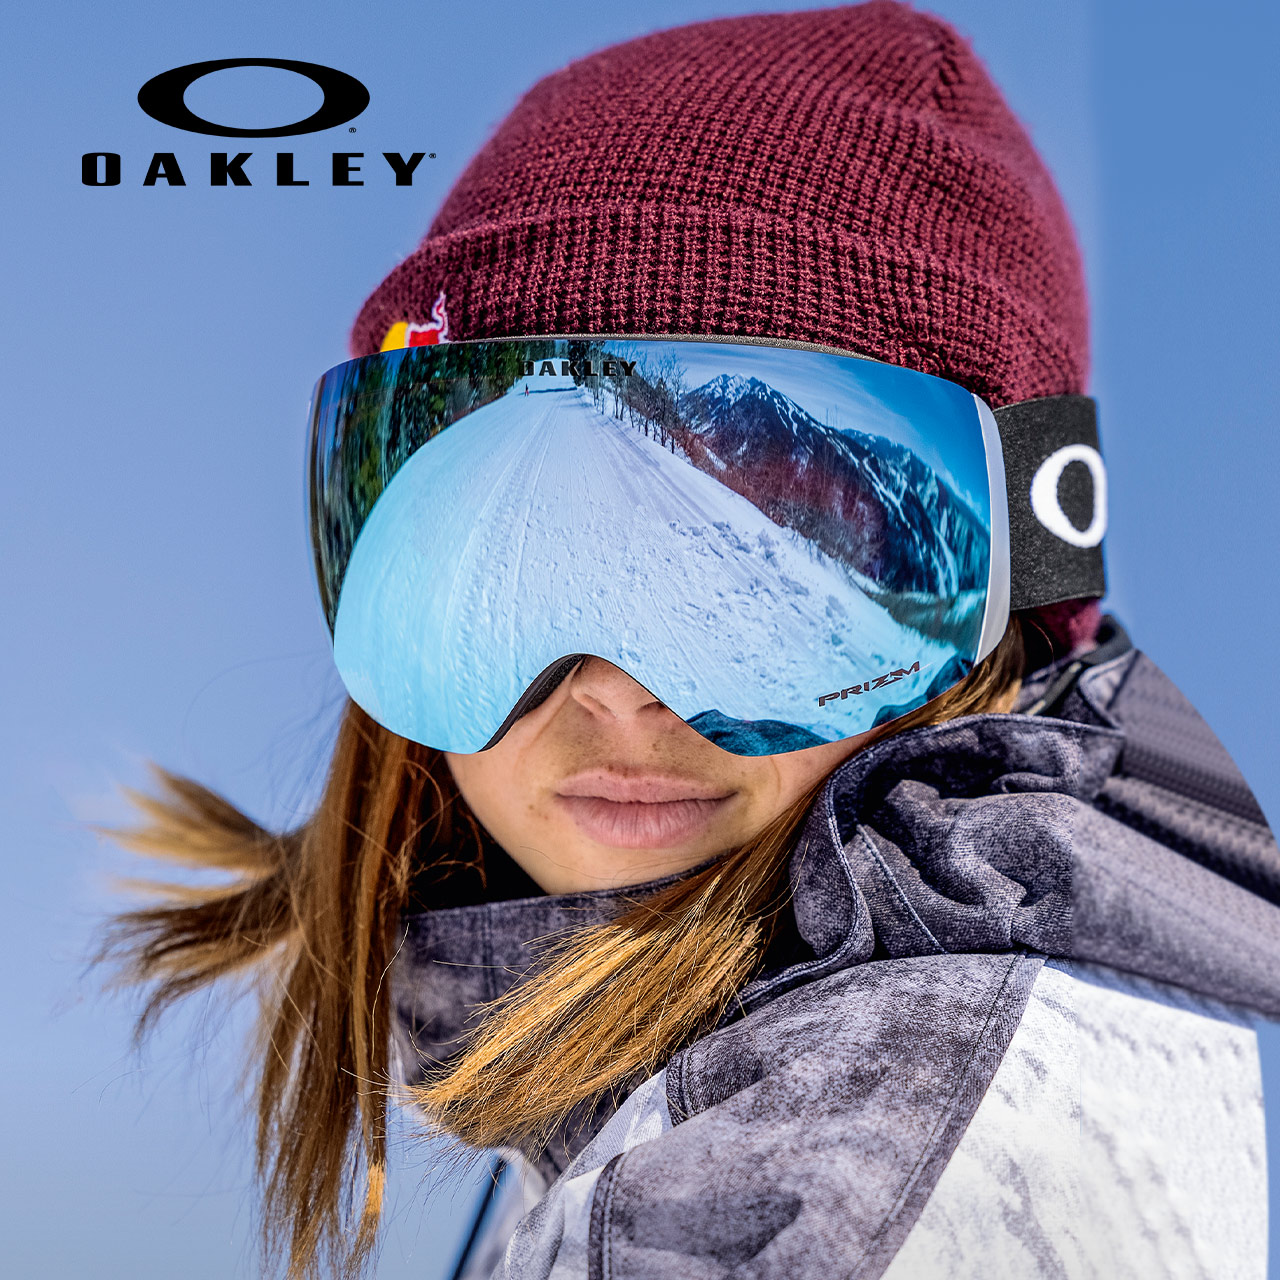 oakley克利滑雪眼镜防护装备